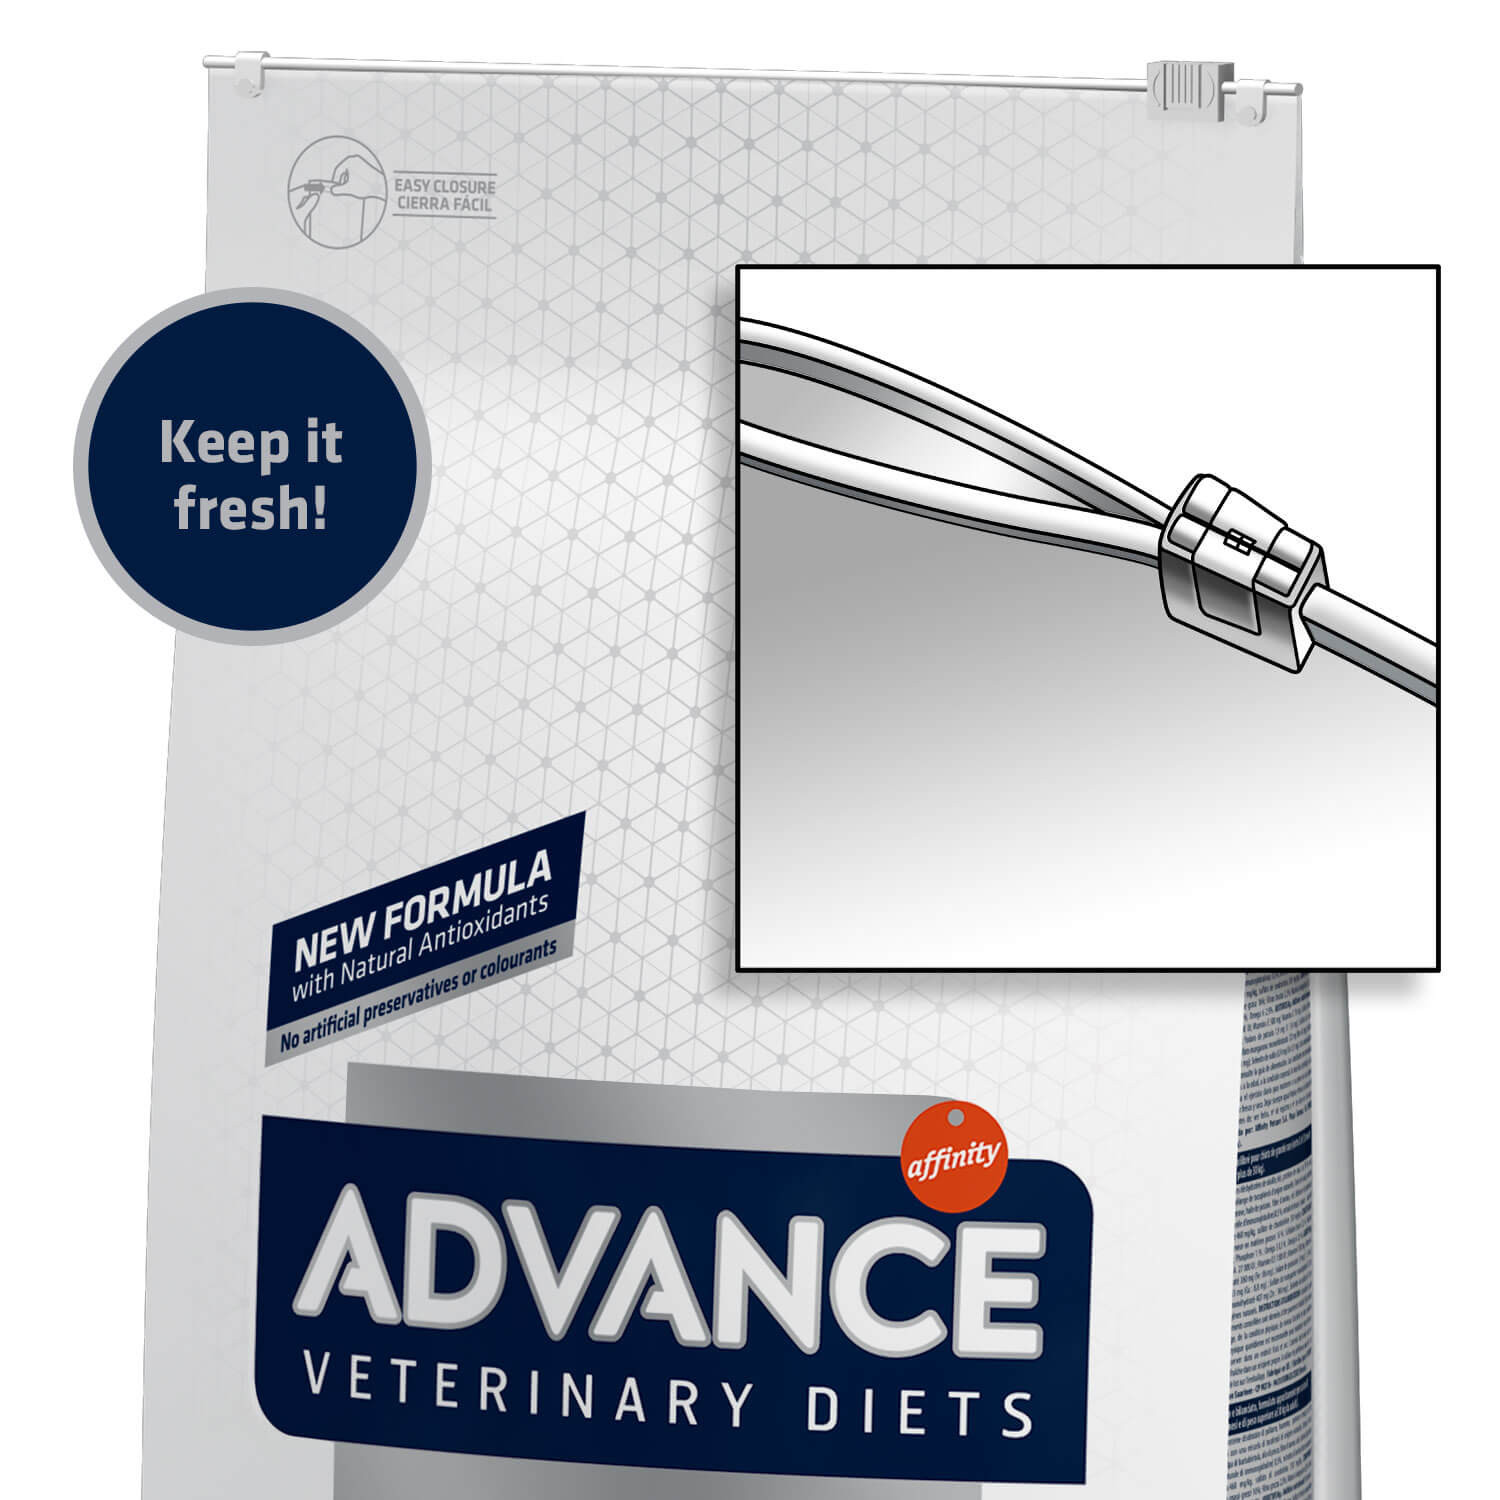 Advance Veterinary Weight Balance kattenvoer